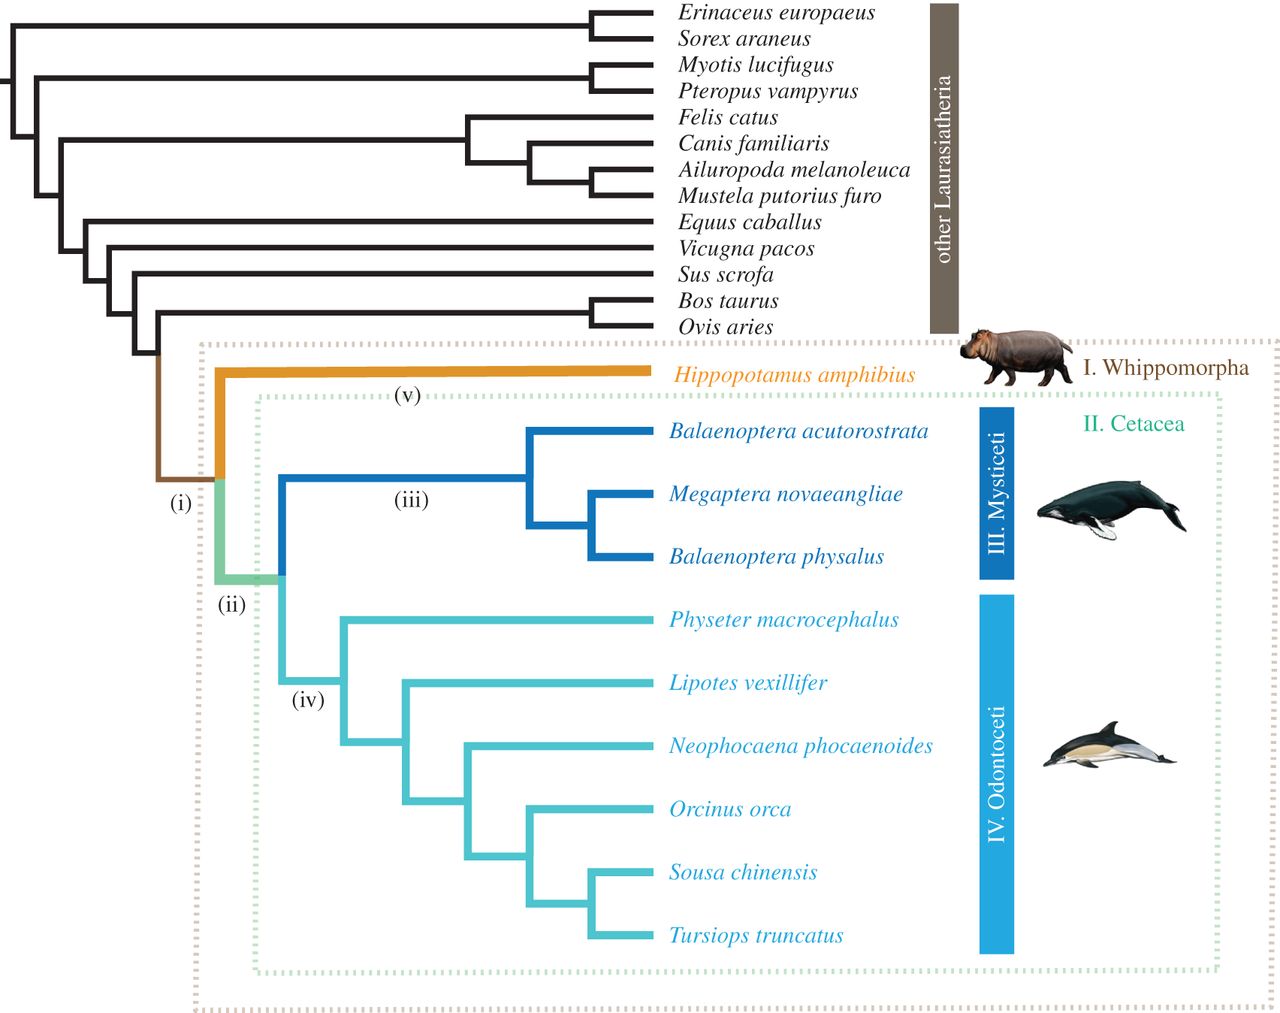 Evolutionary relationships among laurasiatherian mammals